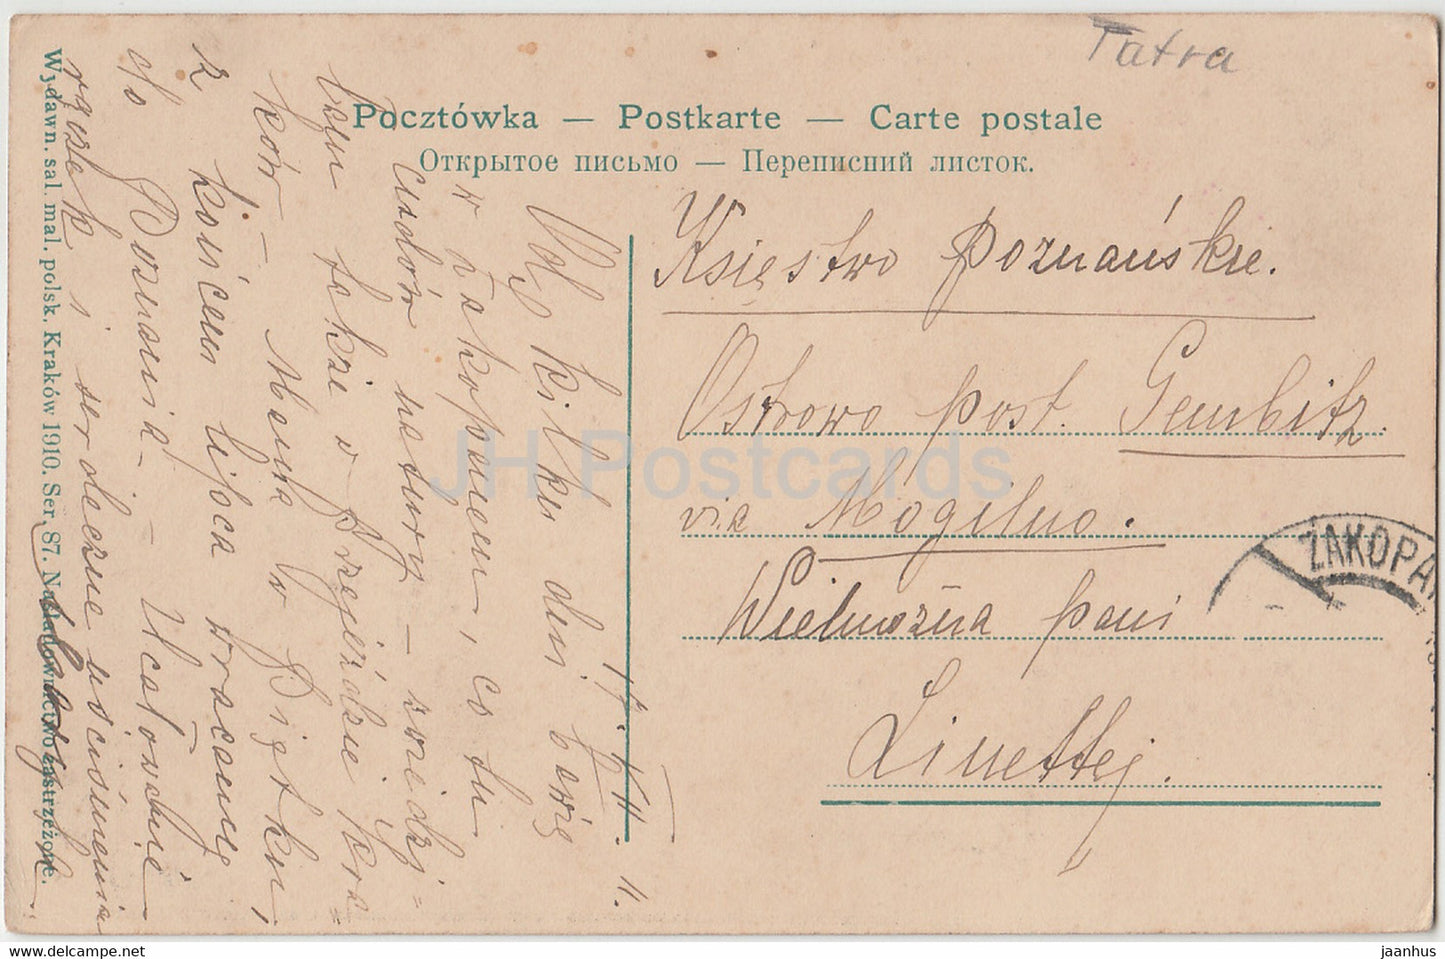 Tatry - Kuznica ze szczytu Nosala - 87 - carte postale ancienne - 1910 - Pologne - utilisé